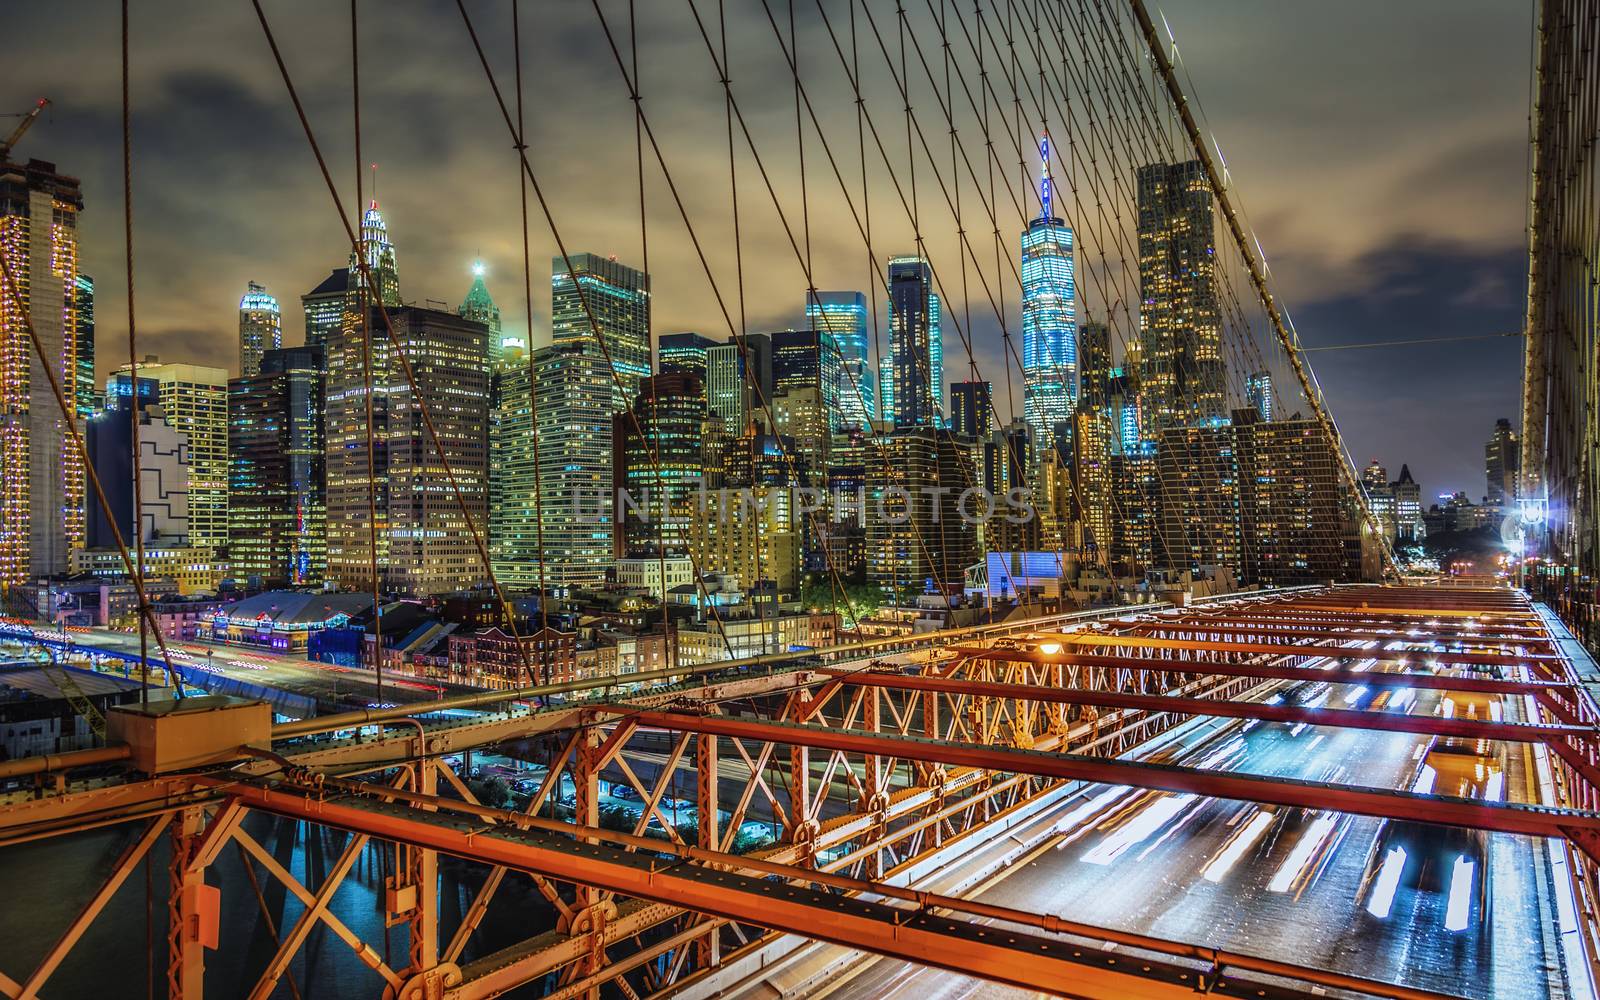 Night shot of Manhattan, New York from the Brooklyn Bridge.